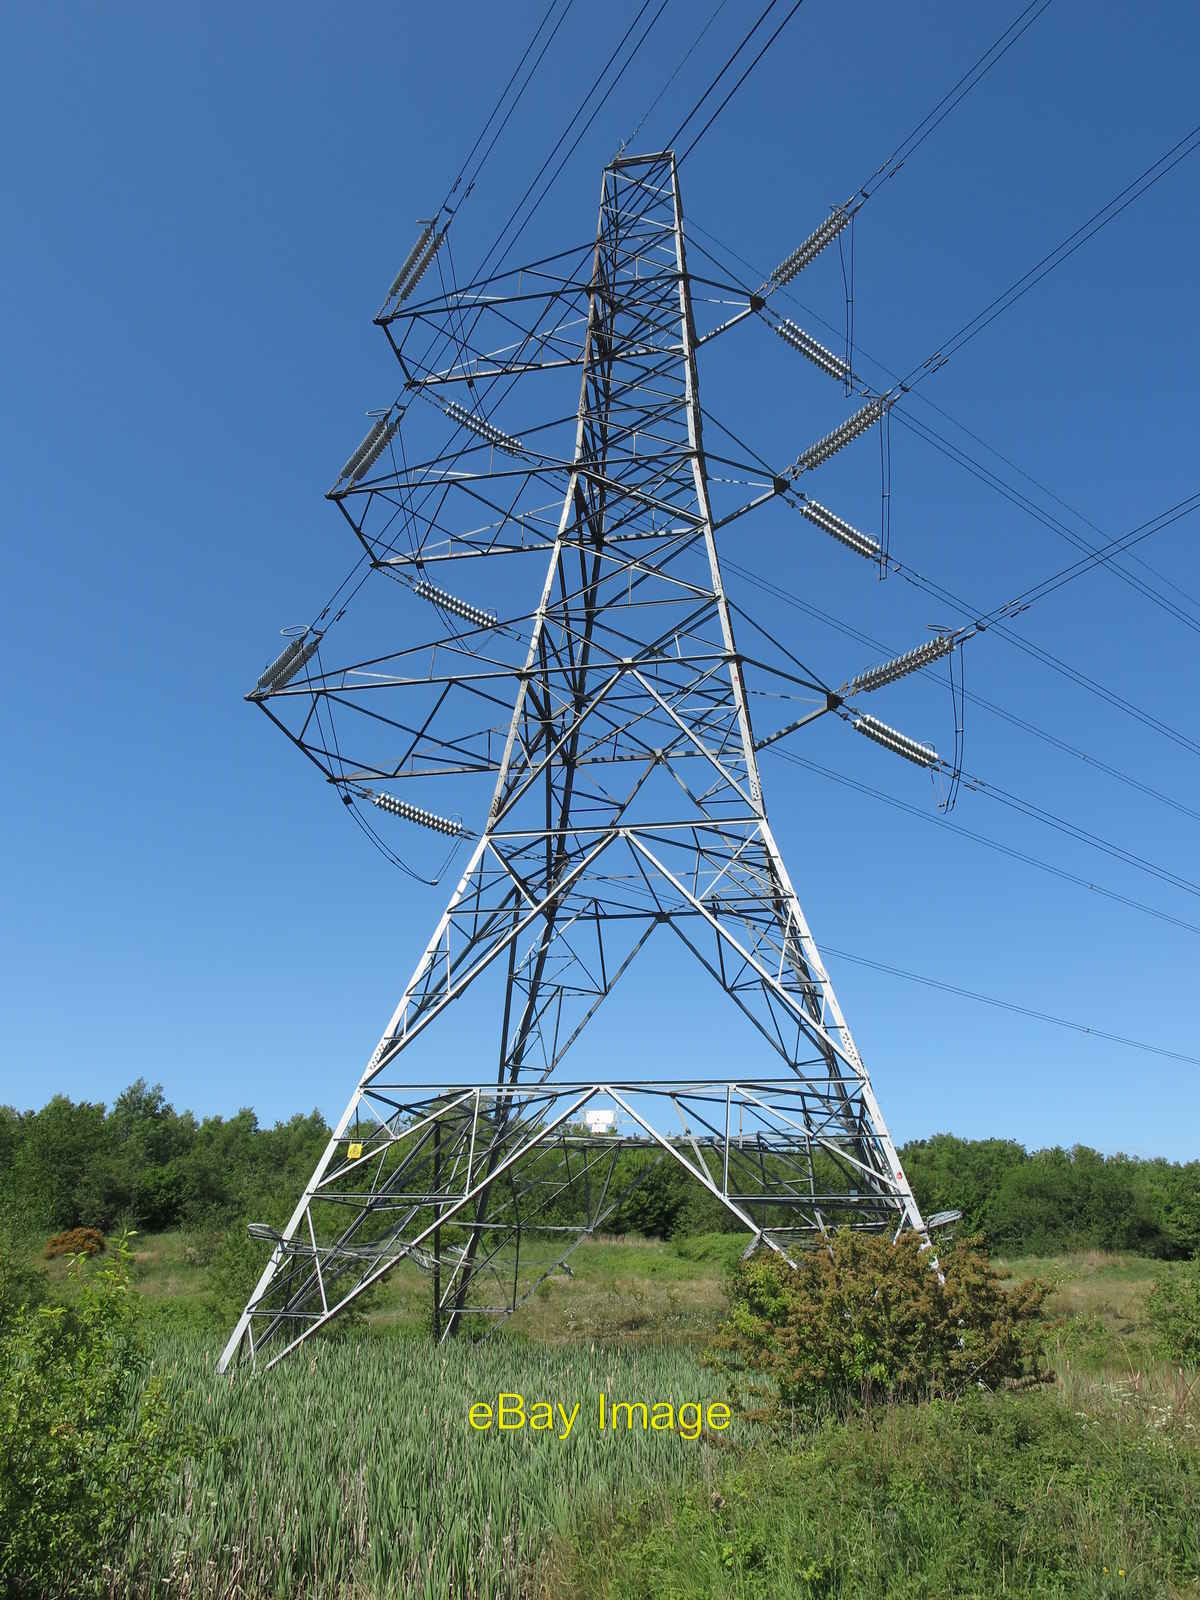 Photo 6x4 Electricity Pylon, Silverlink Biodiversity Park, Shiremoor Murt c2020